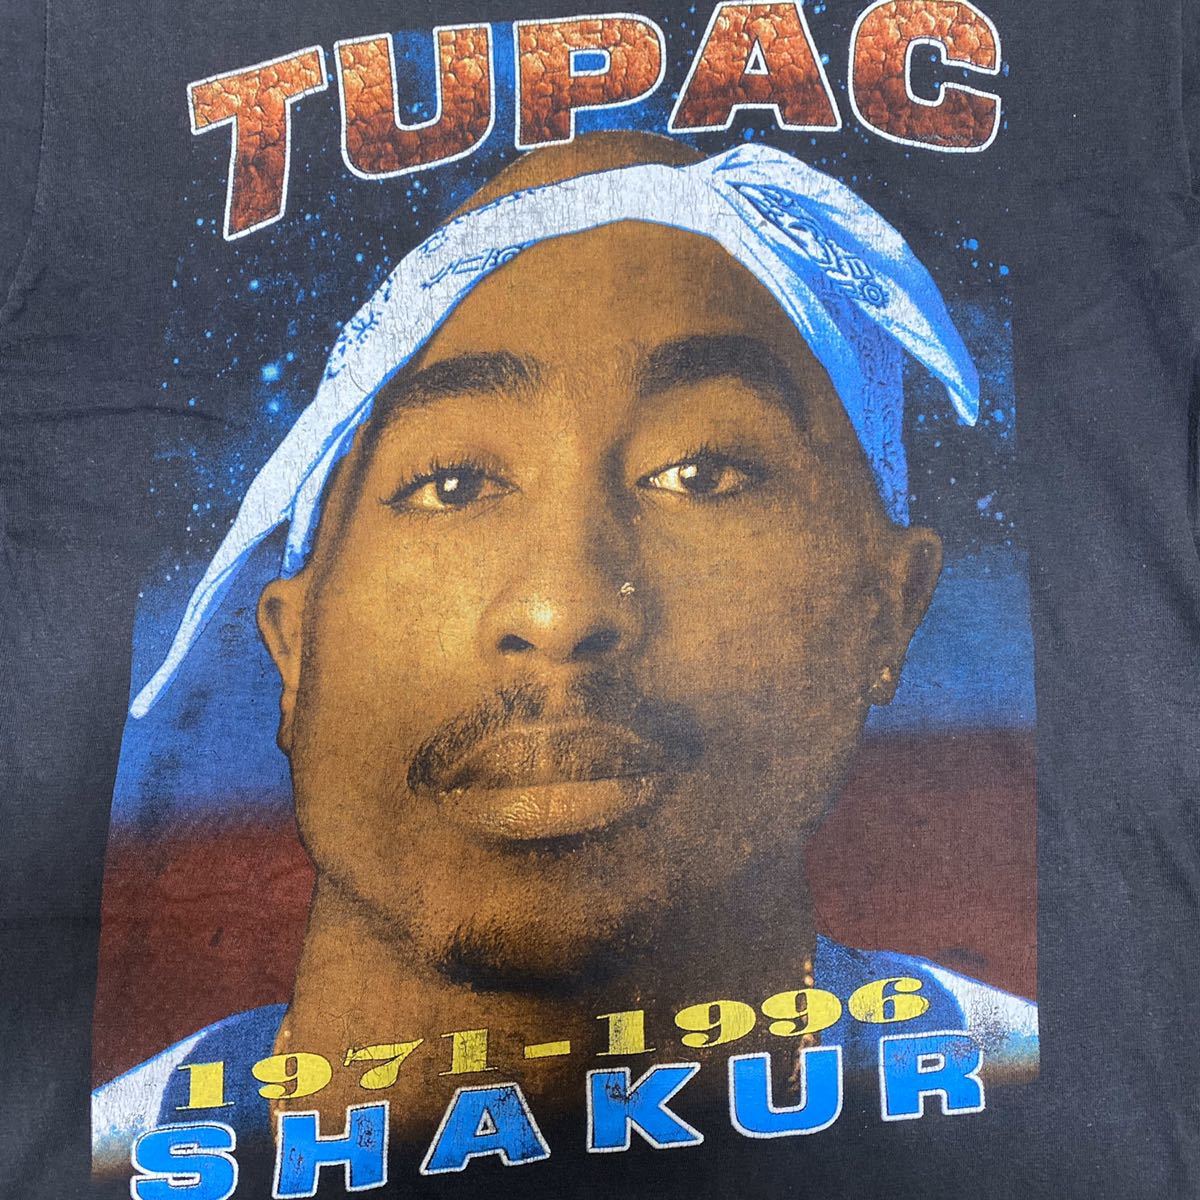 TUPAC 2PAC AGAINST ALL ODDS Vintage rap tee shirt ヴィンテージ ビンテージ ラップ Tシャツ 90s biggie sade bjork snoopdog kurtcobain_画像2